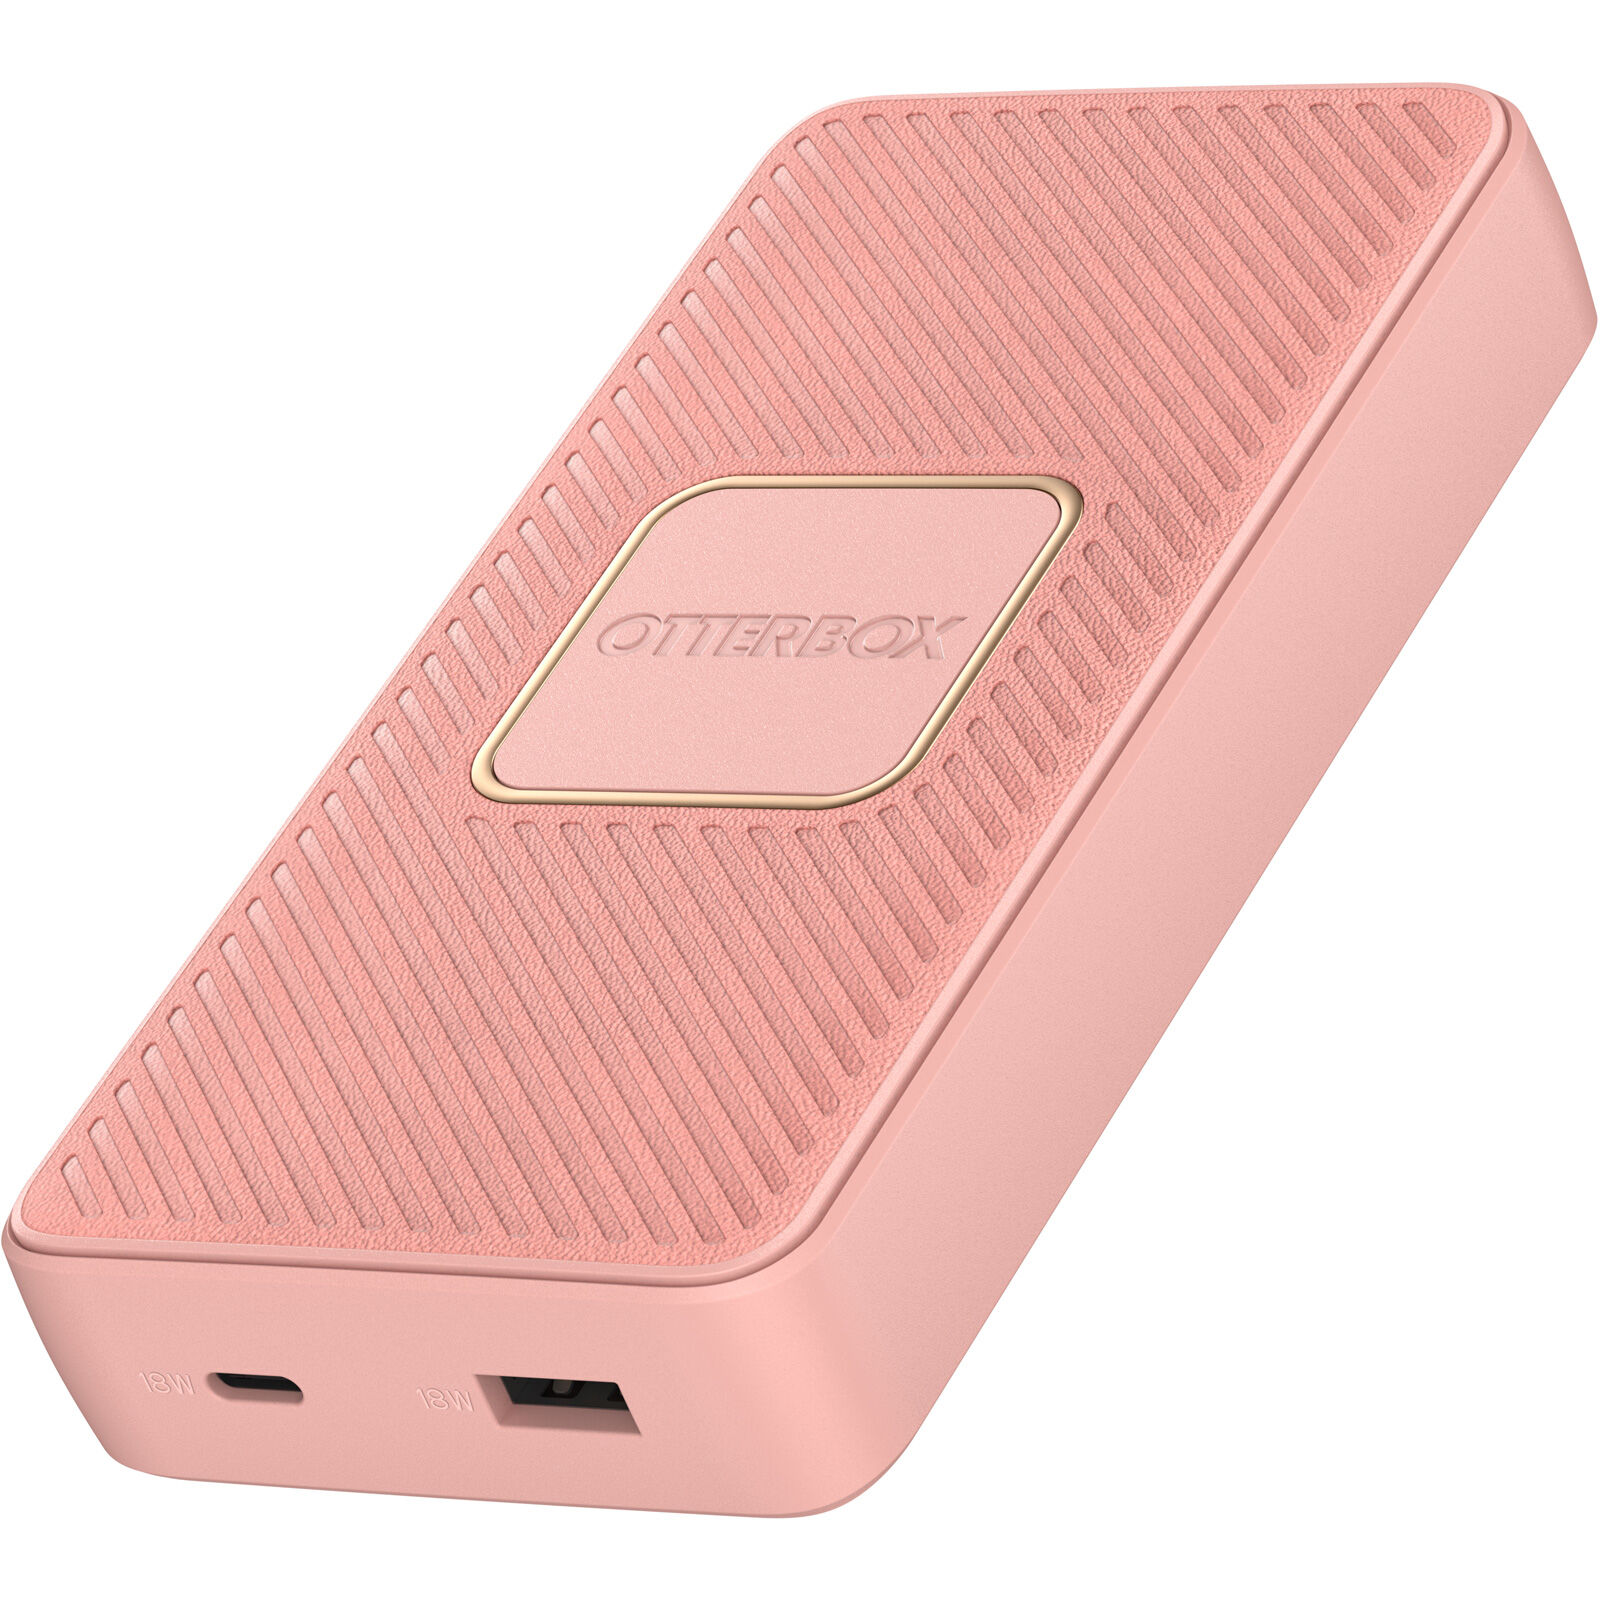 Wireless Power Bank - Pink